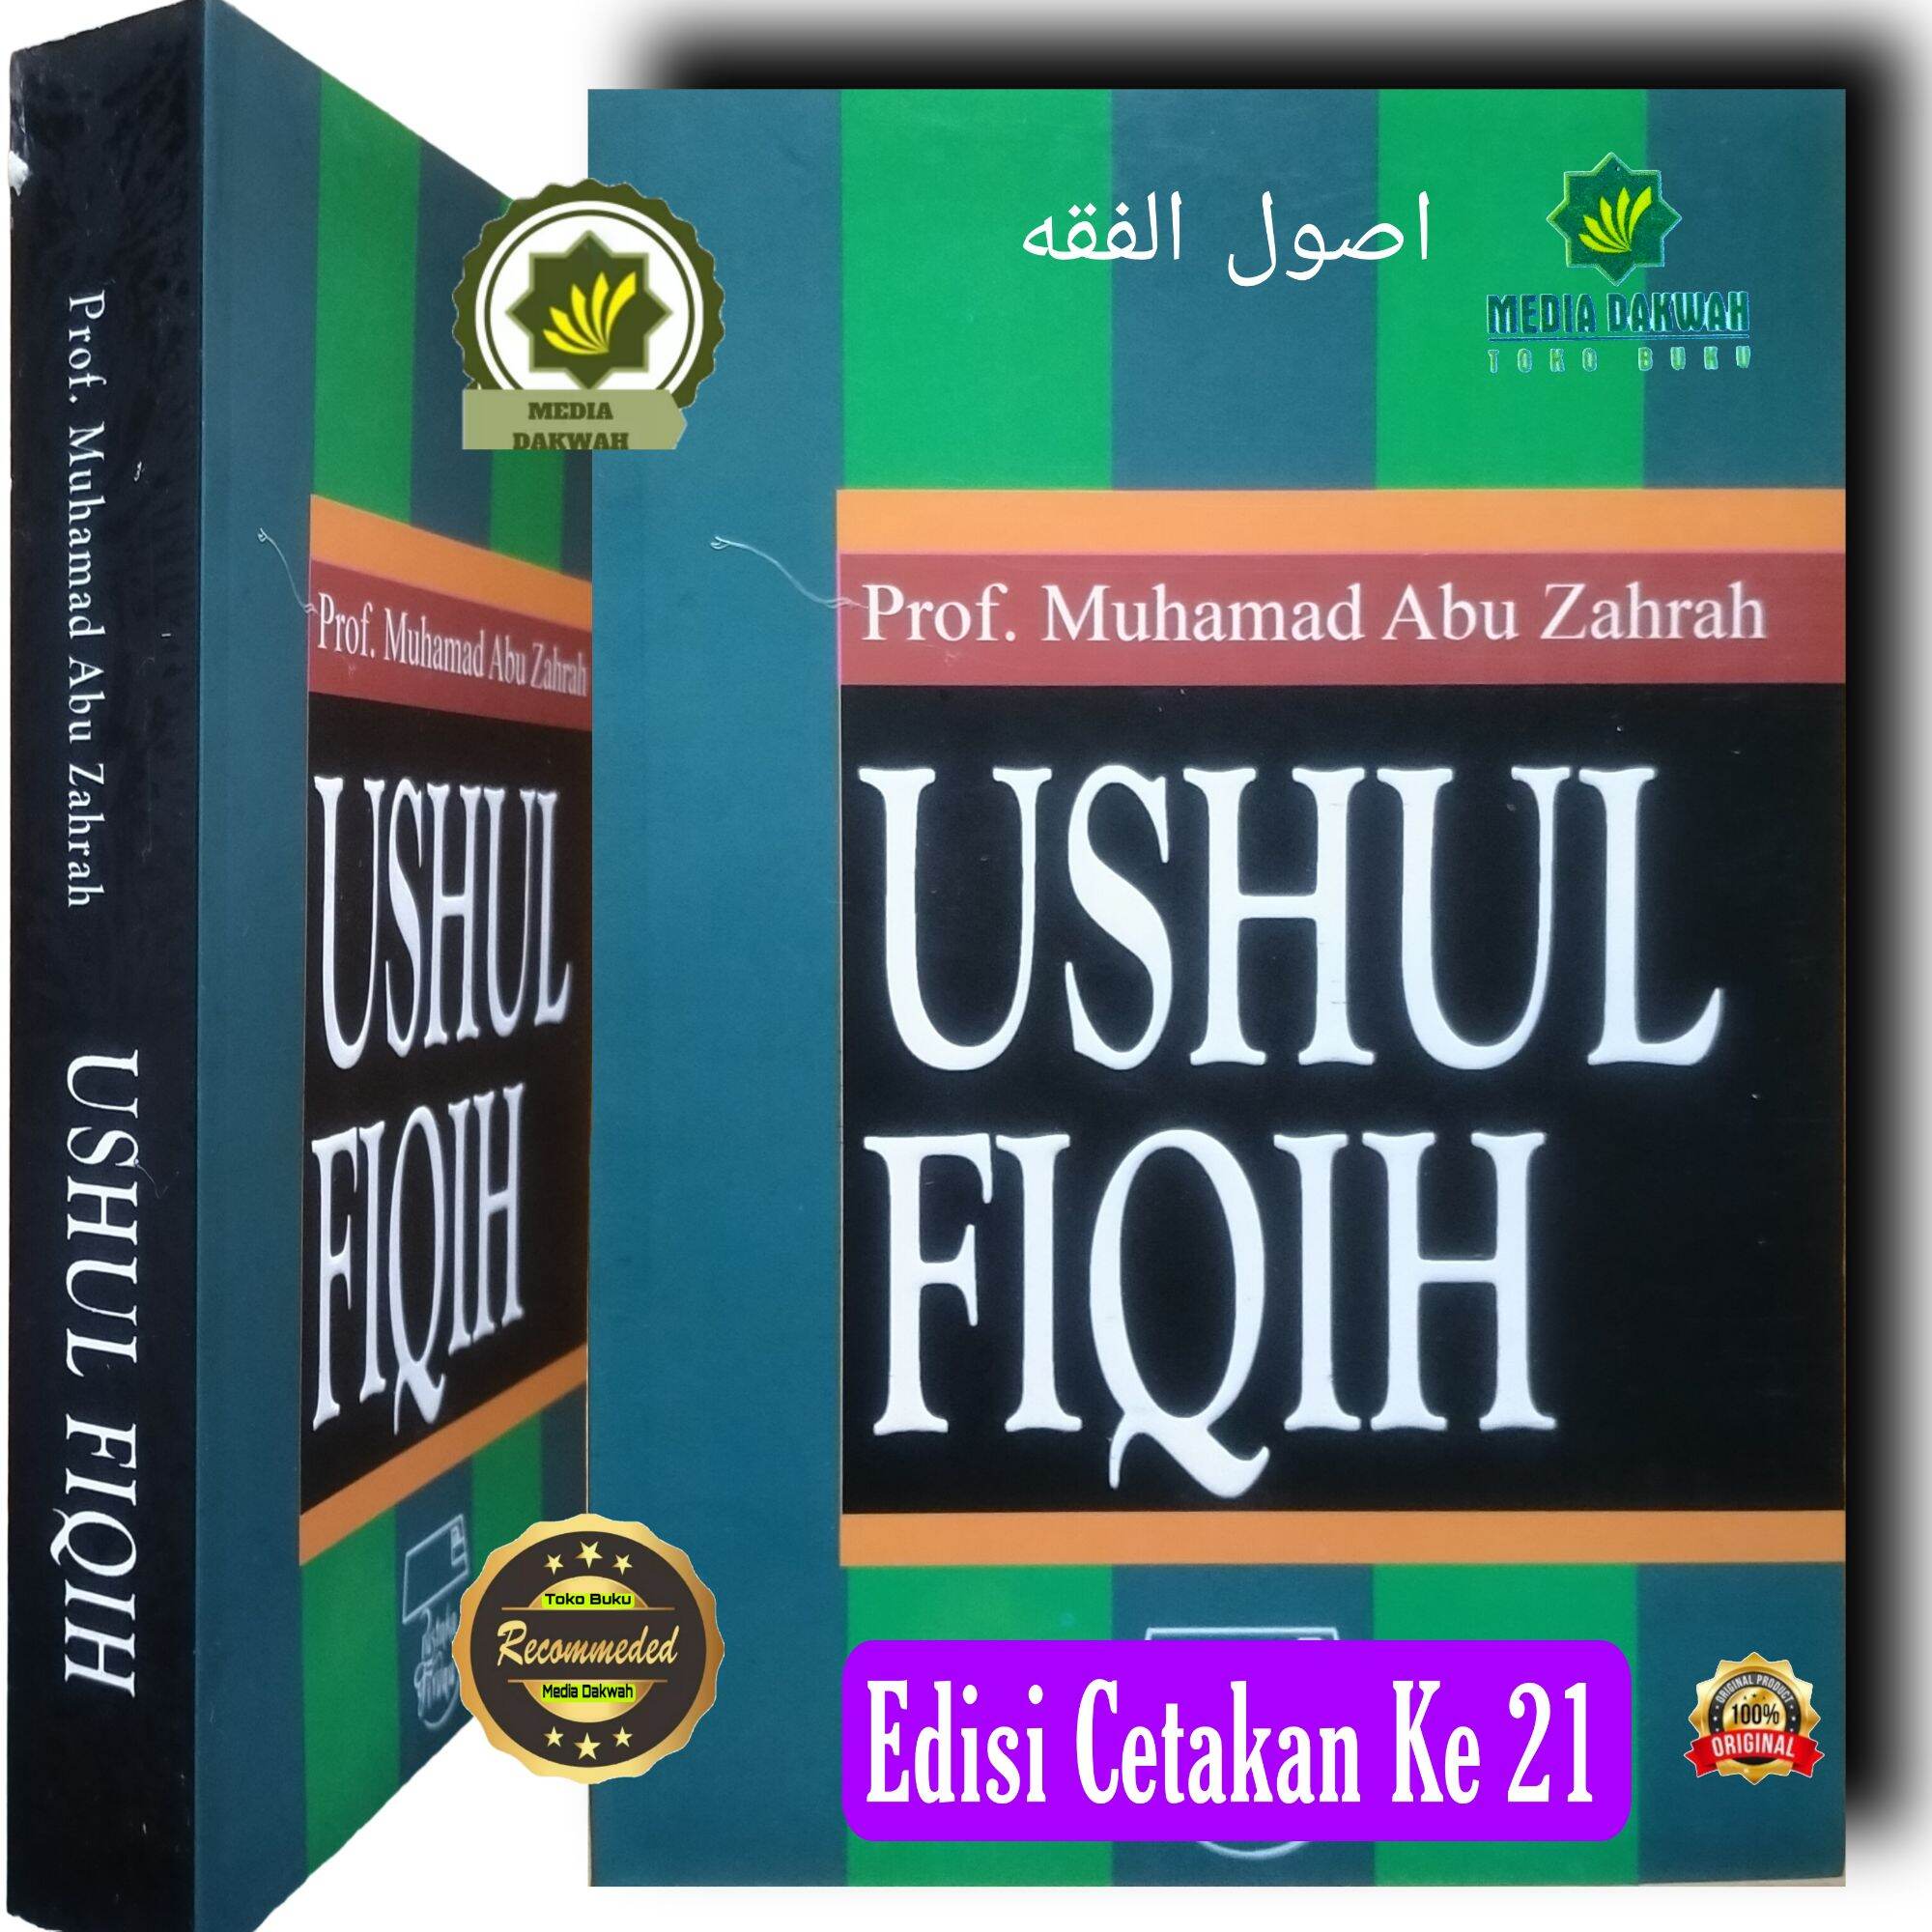 Buku Referensi Ushul Fiqih Usul Fiqh Kitab Usul Fikih Kaidah Ushul